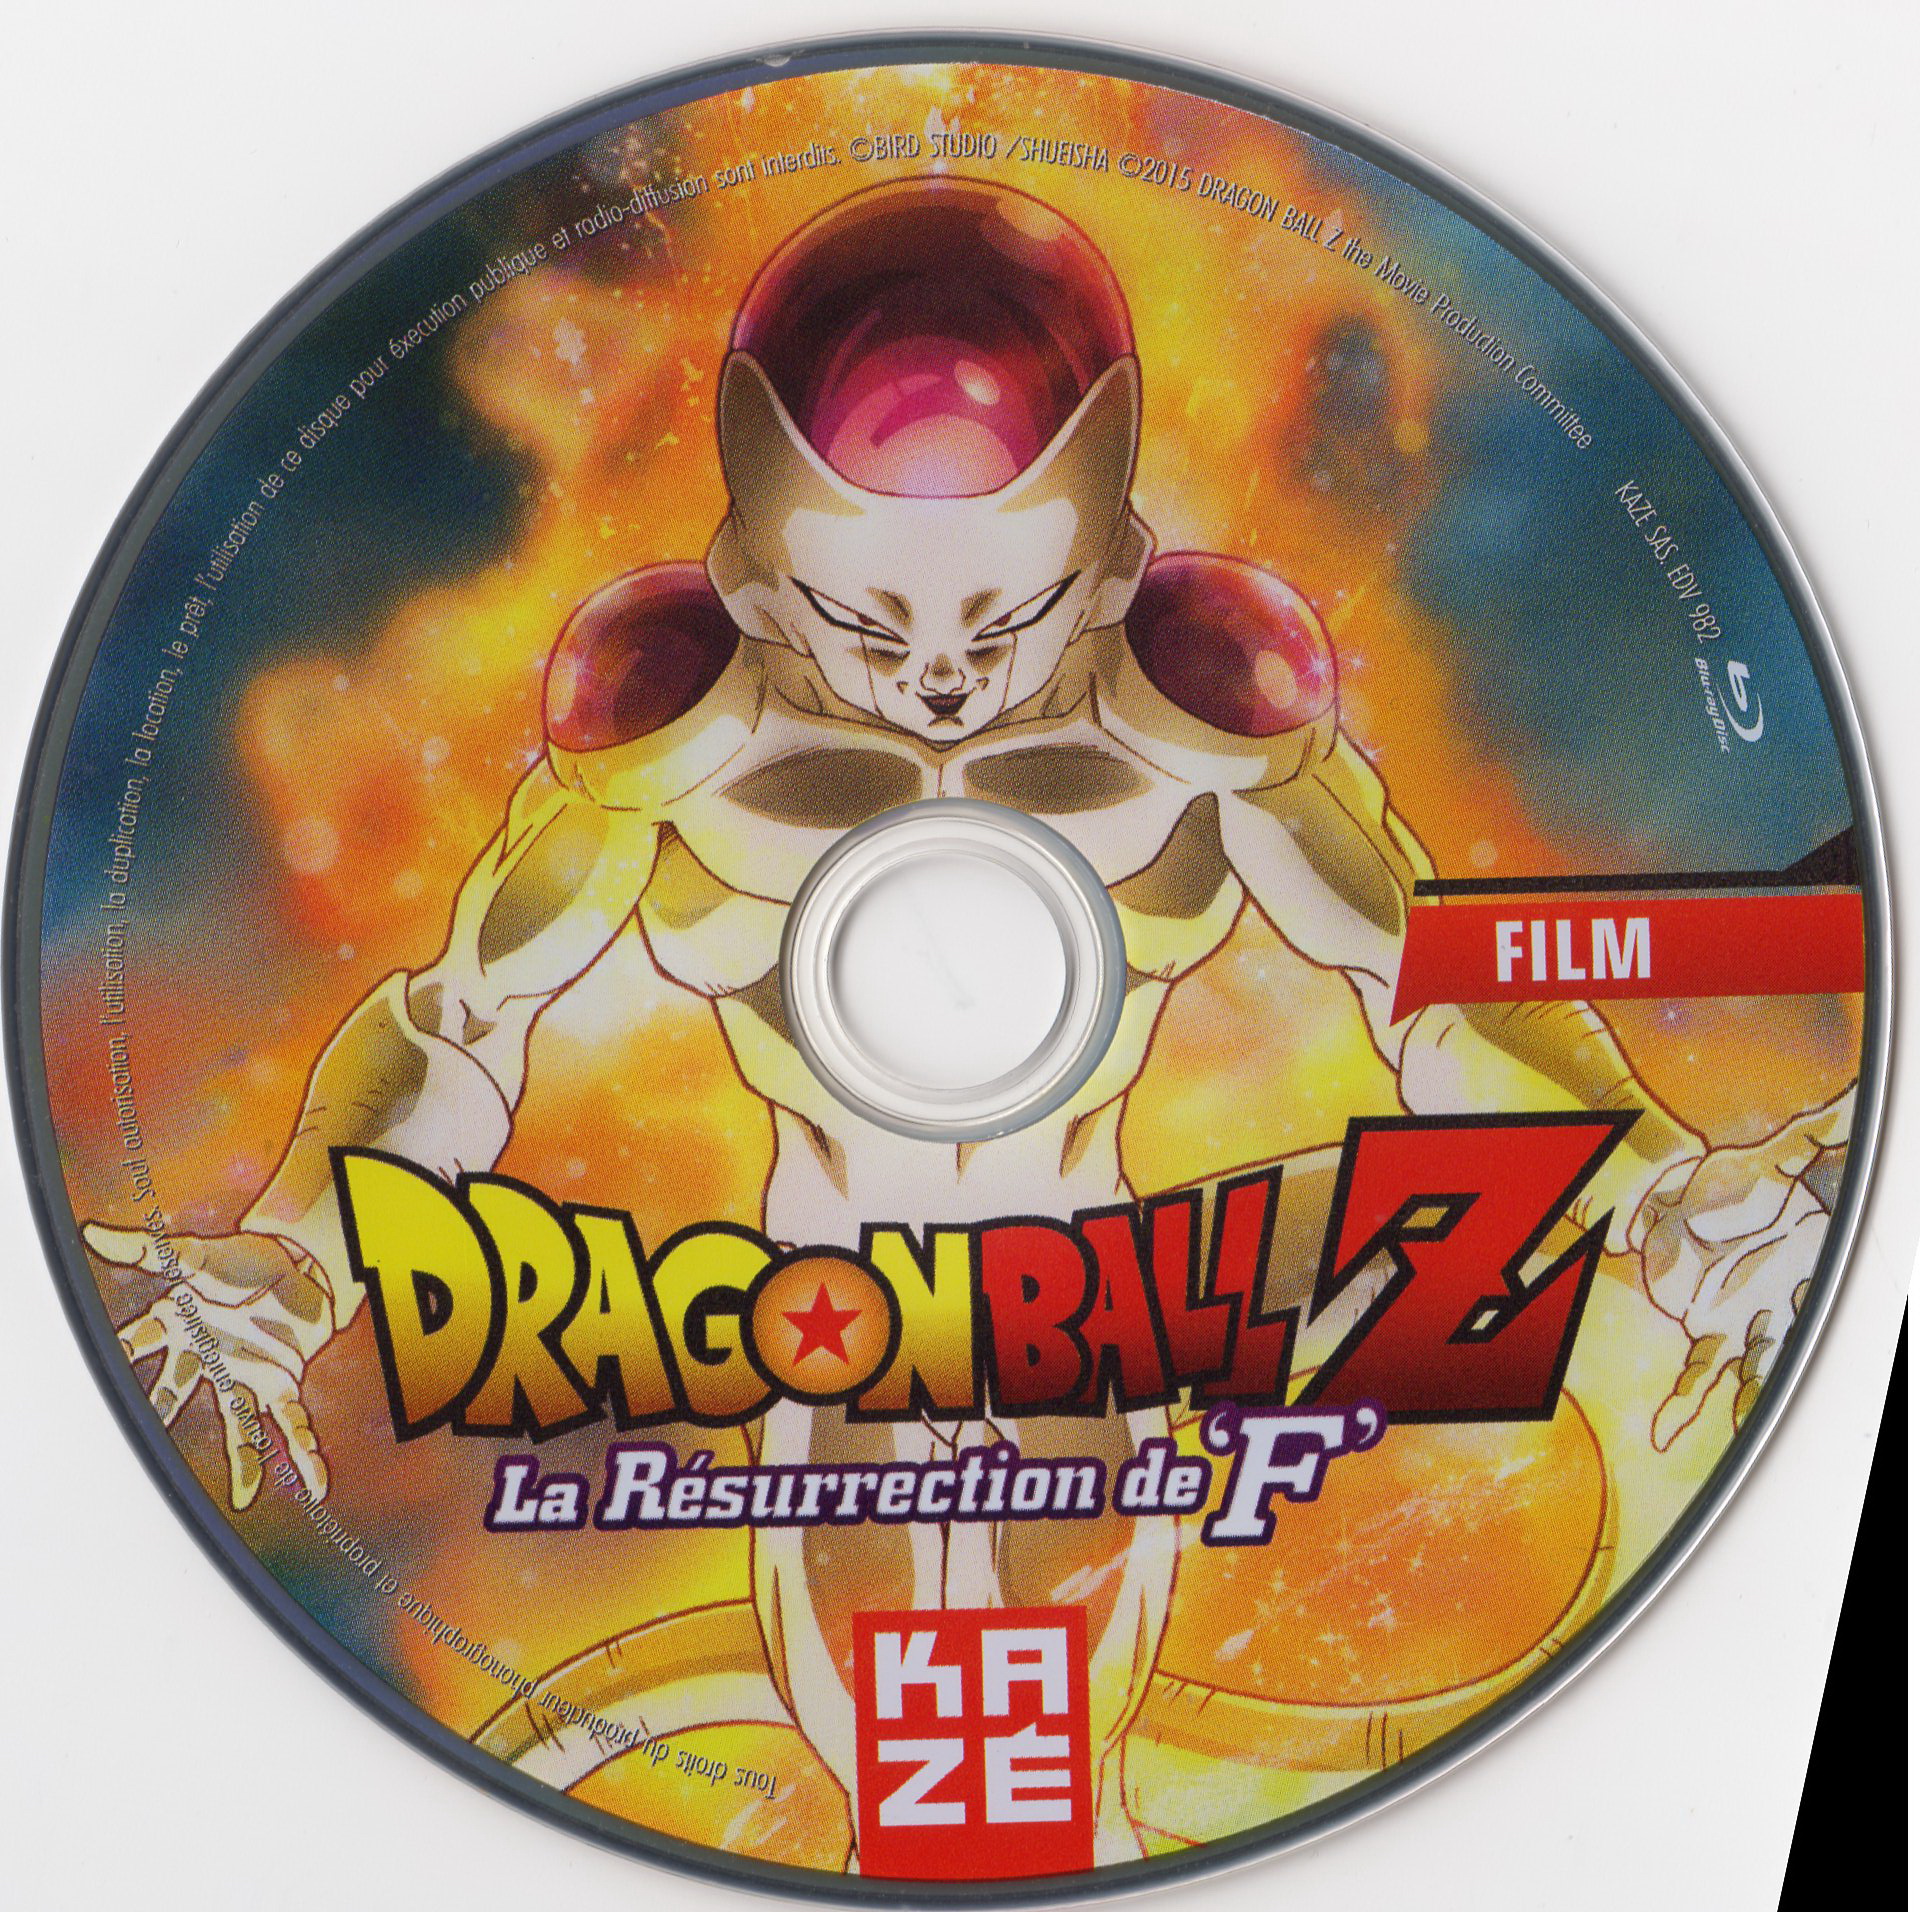 DragonBall Z - La resurrection de Freezer (BLU-RAY)